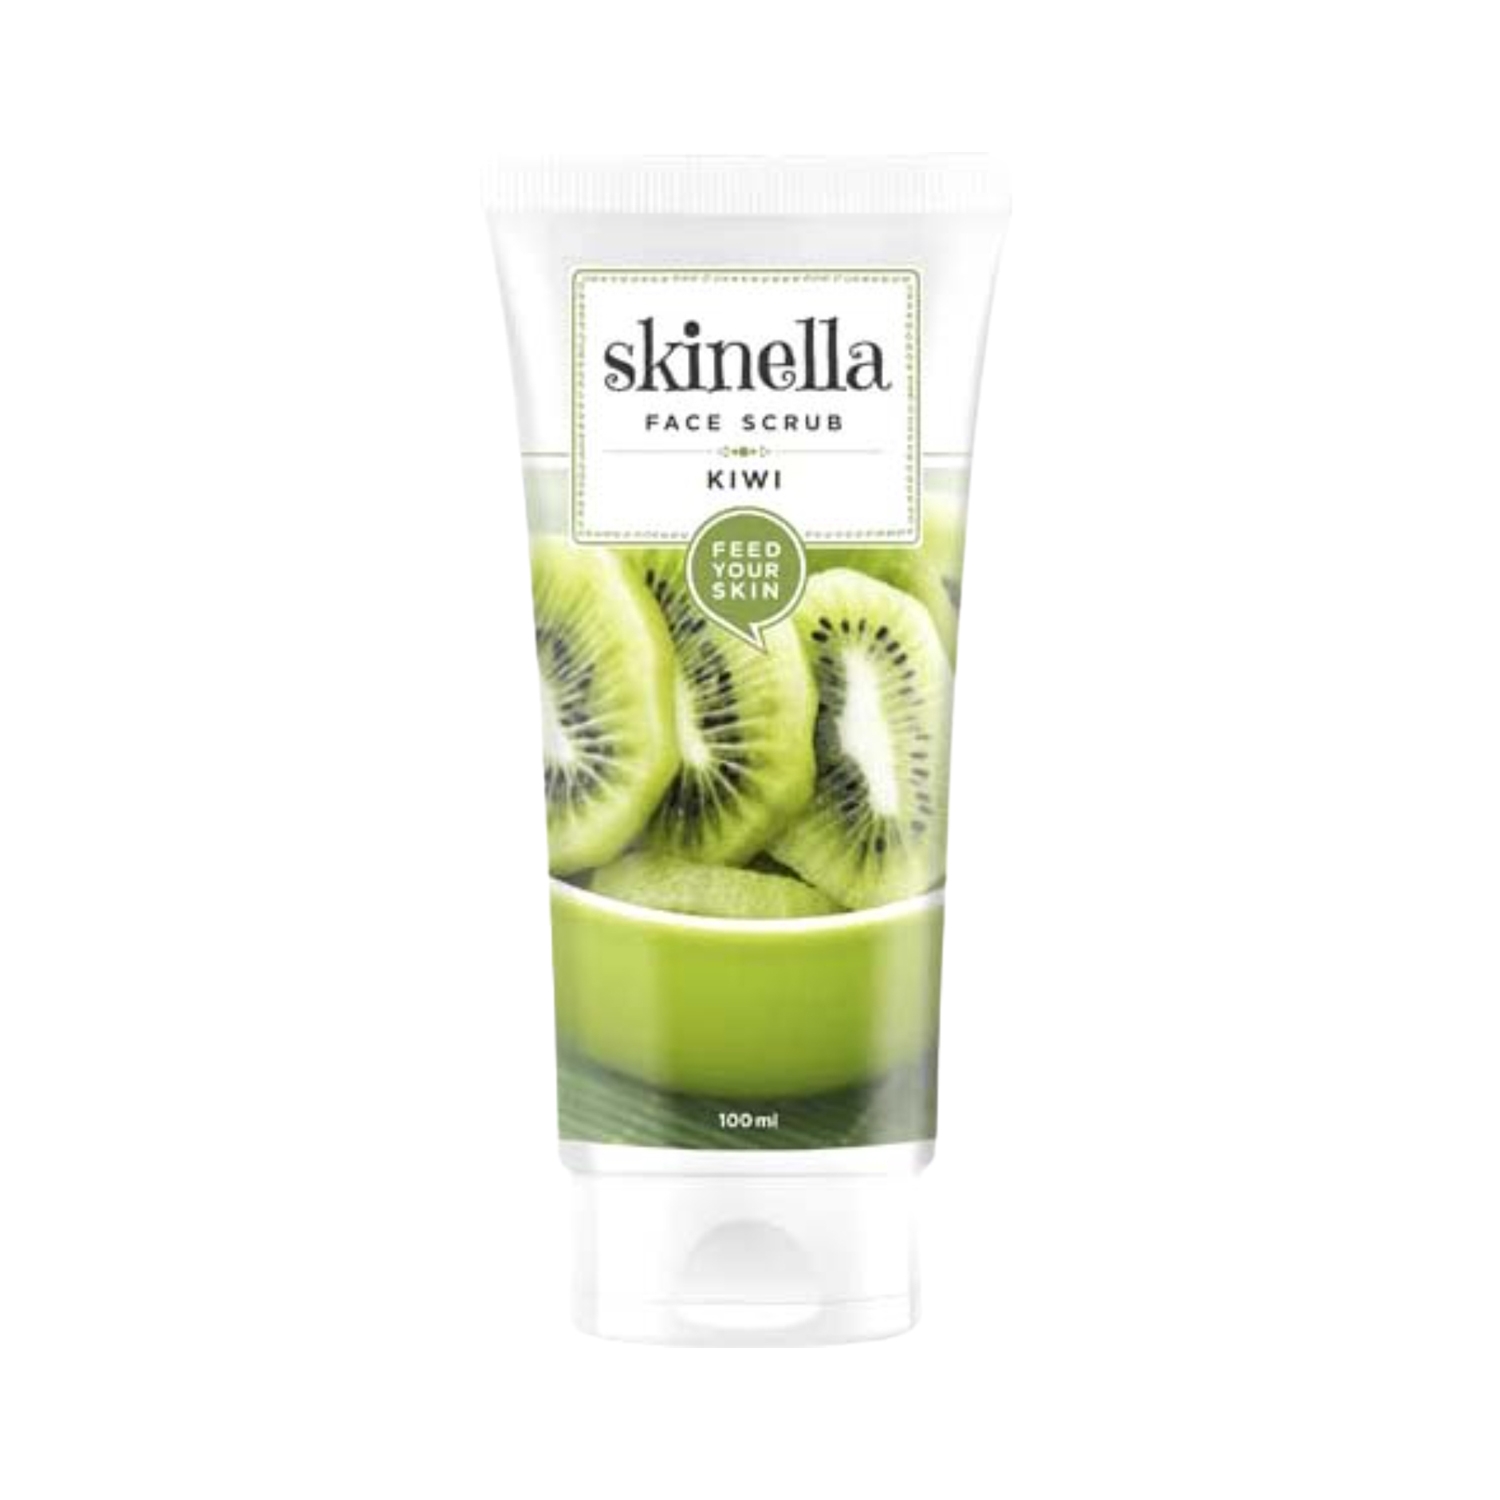 Skinella | Skinella Face Scrub - Kiwi (100g)